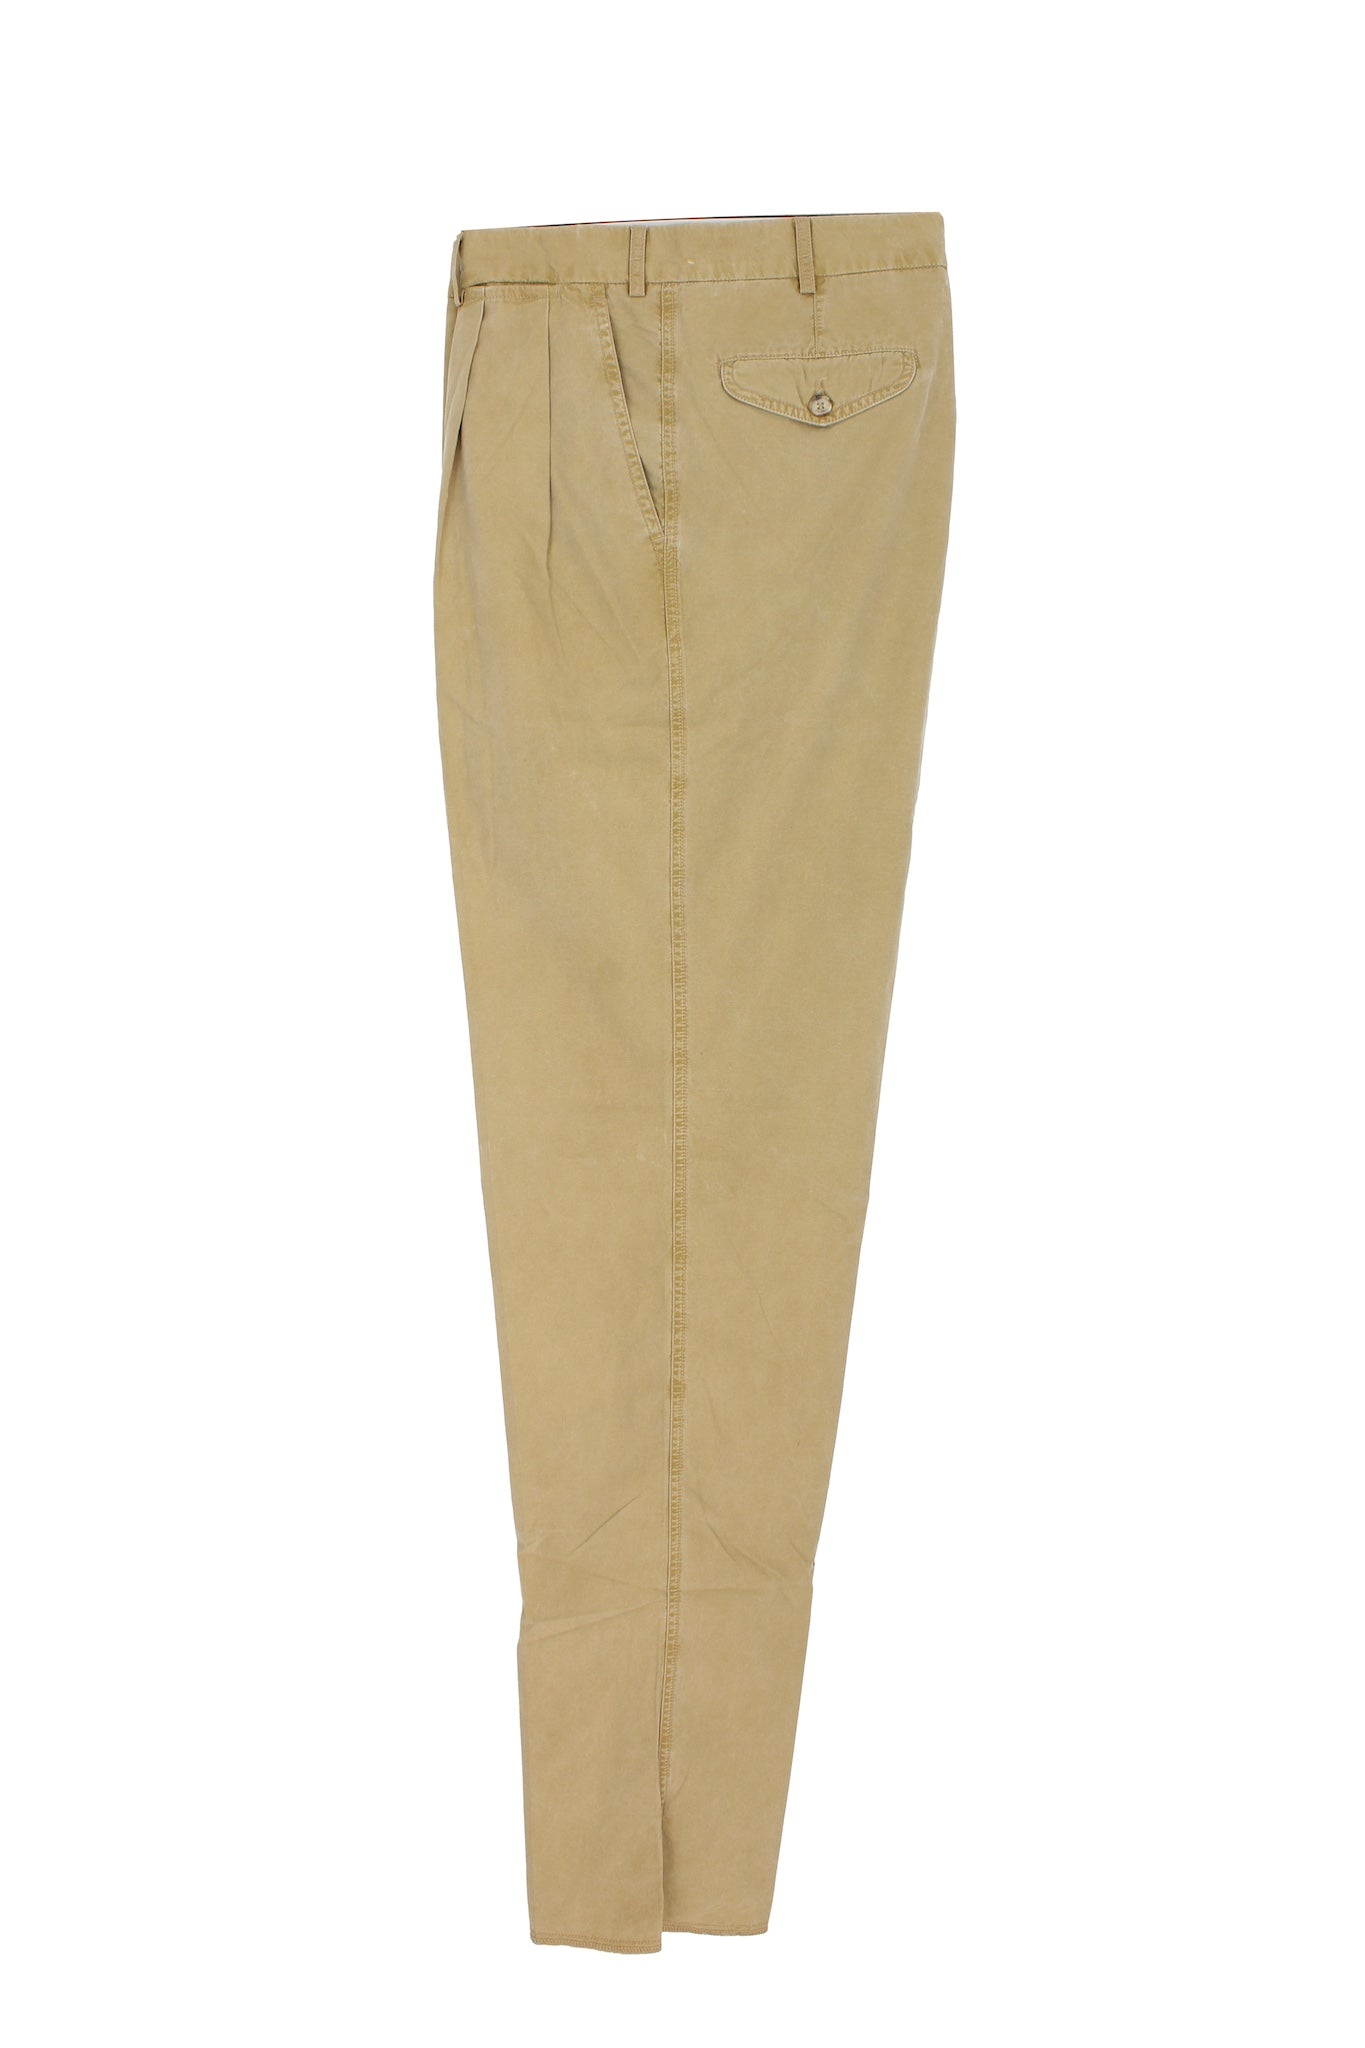 Burberry Cotton Classic Trousers Vintage 90s